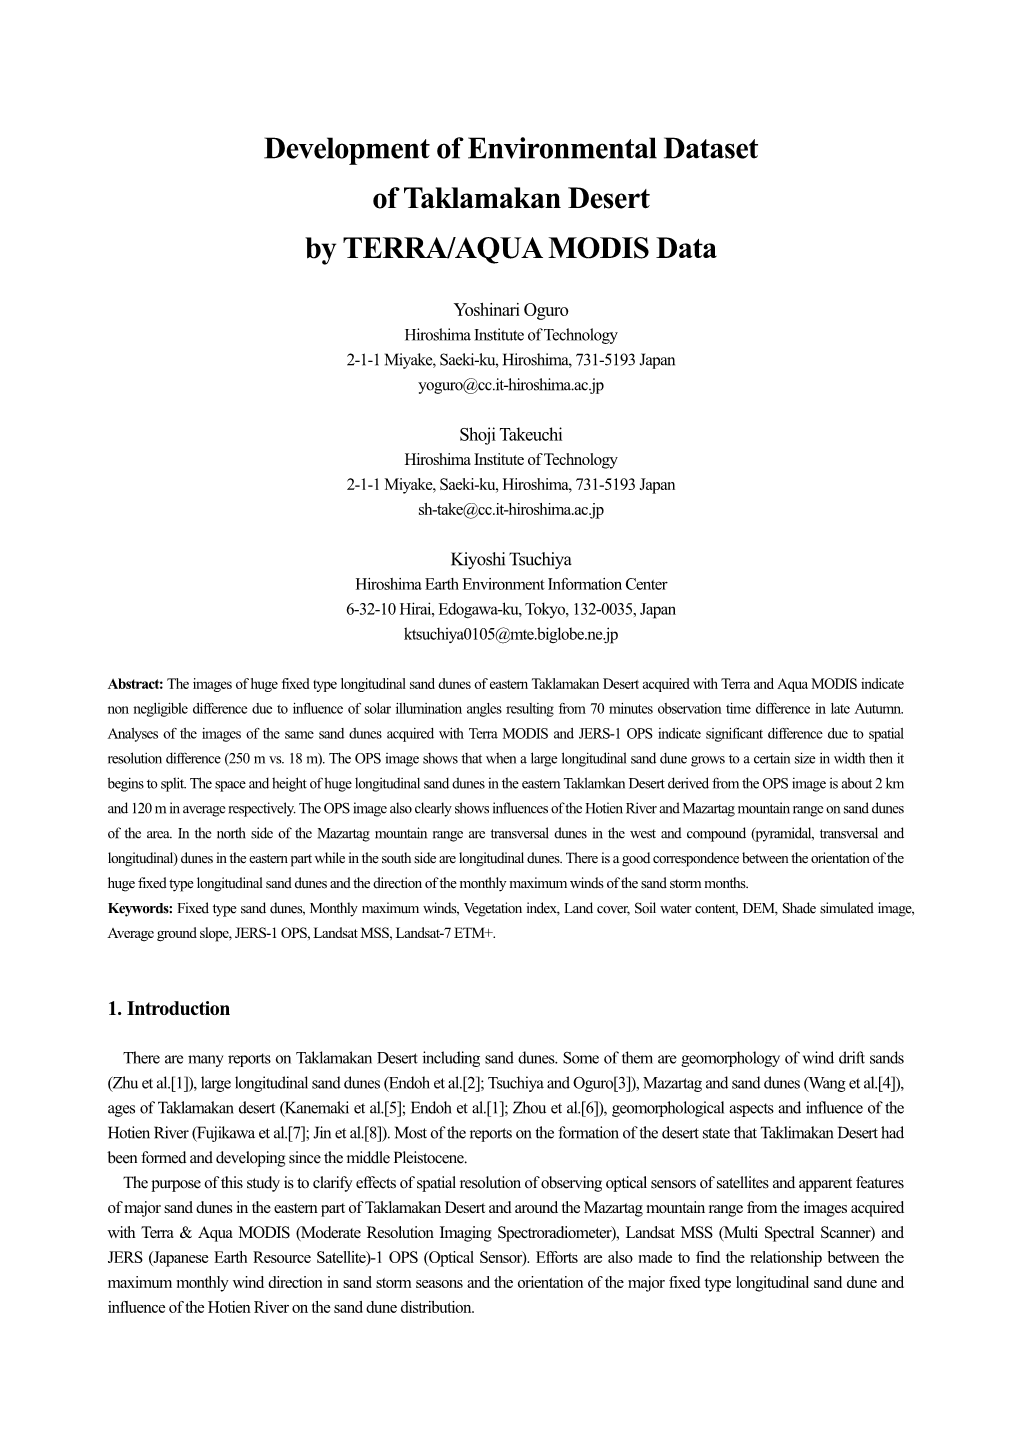 Development of Environmental Dataset of Taklamakan Desert by TERRA/AQUA MODIS Data